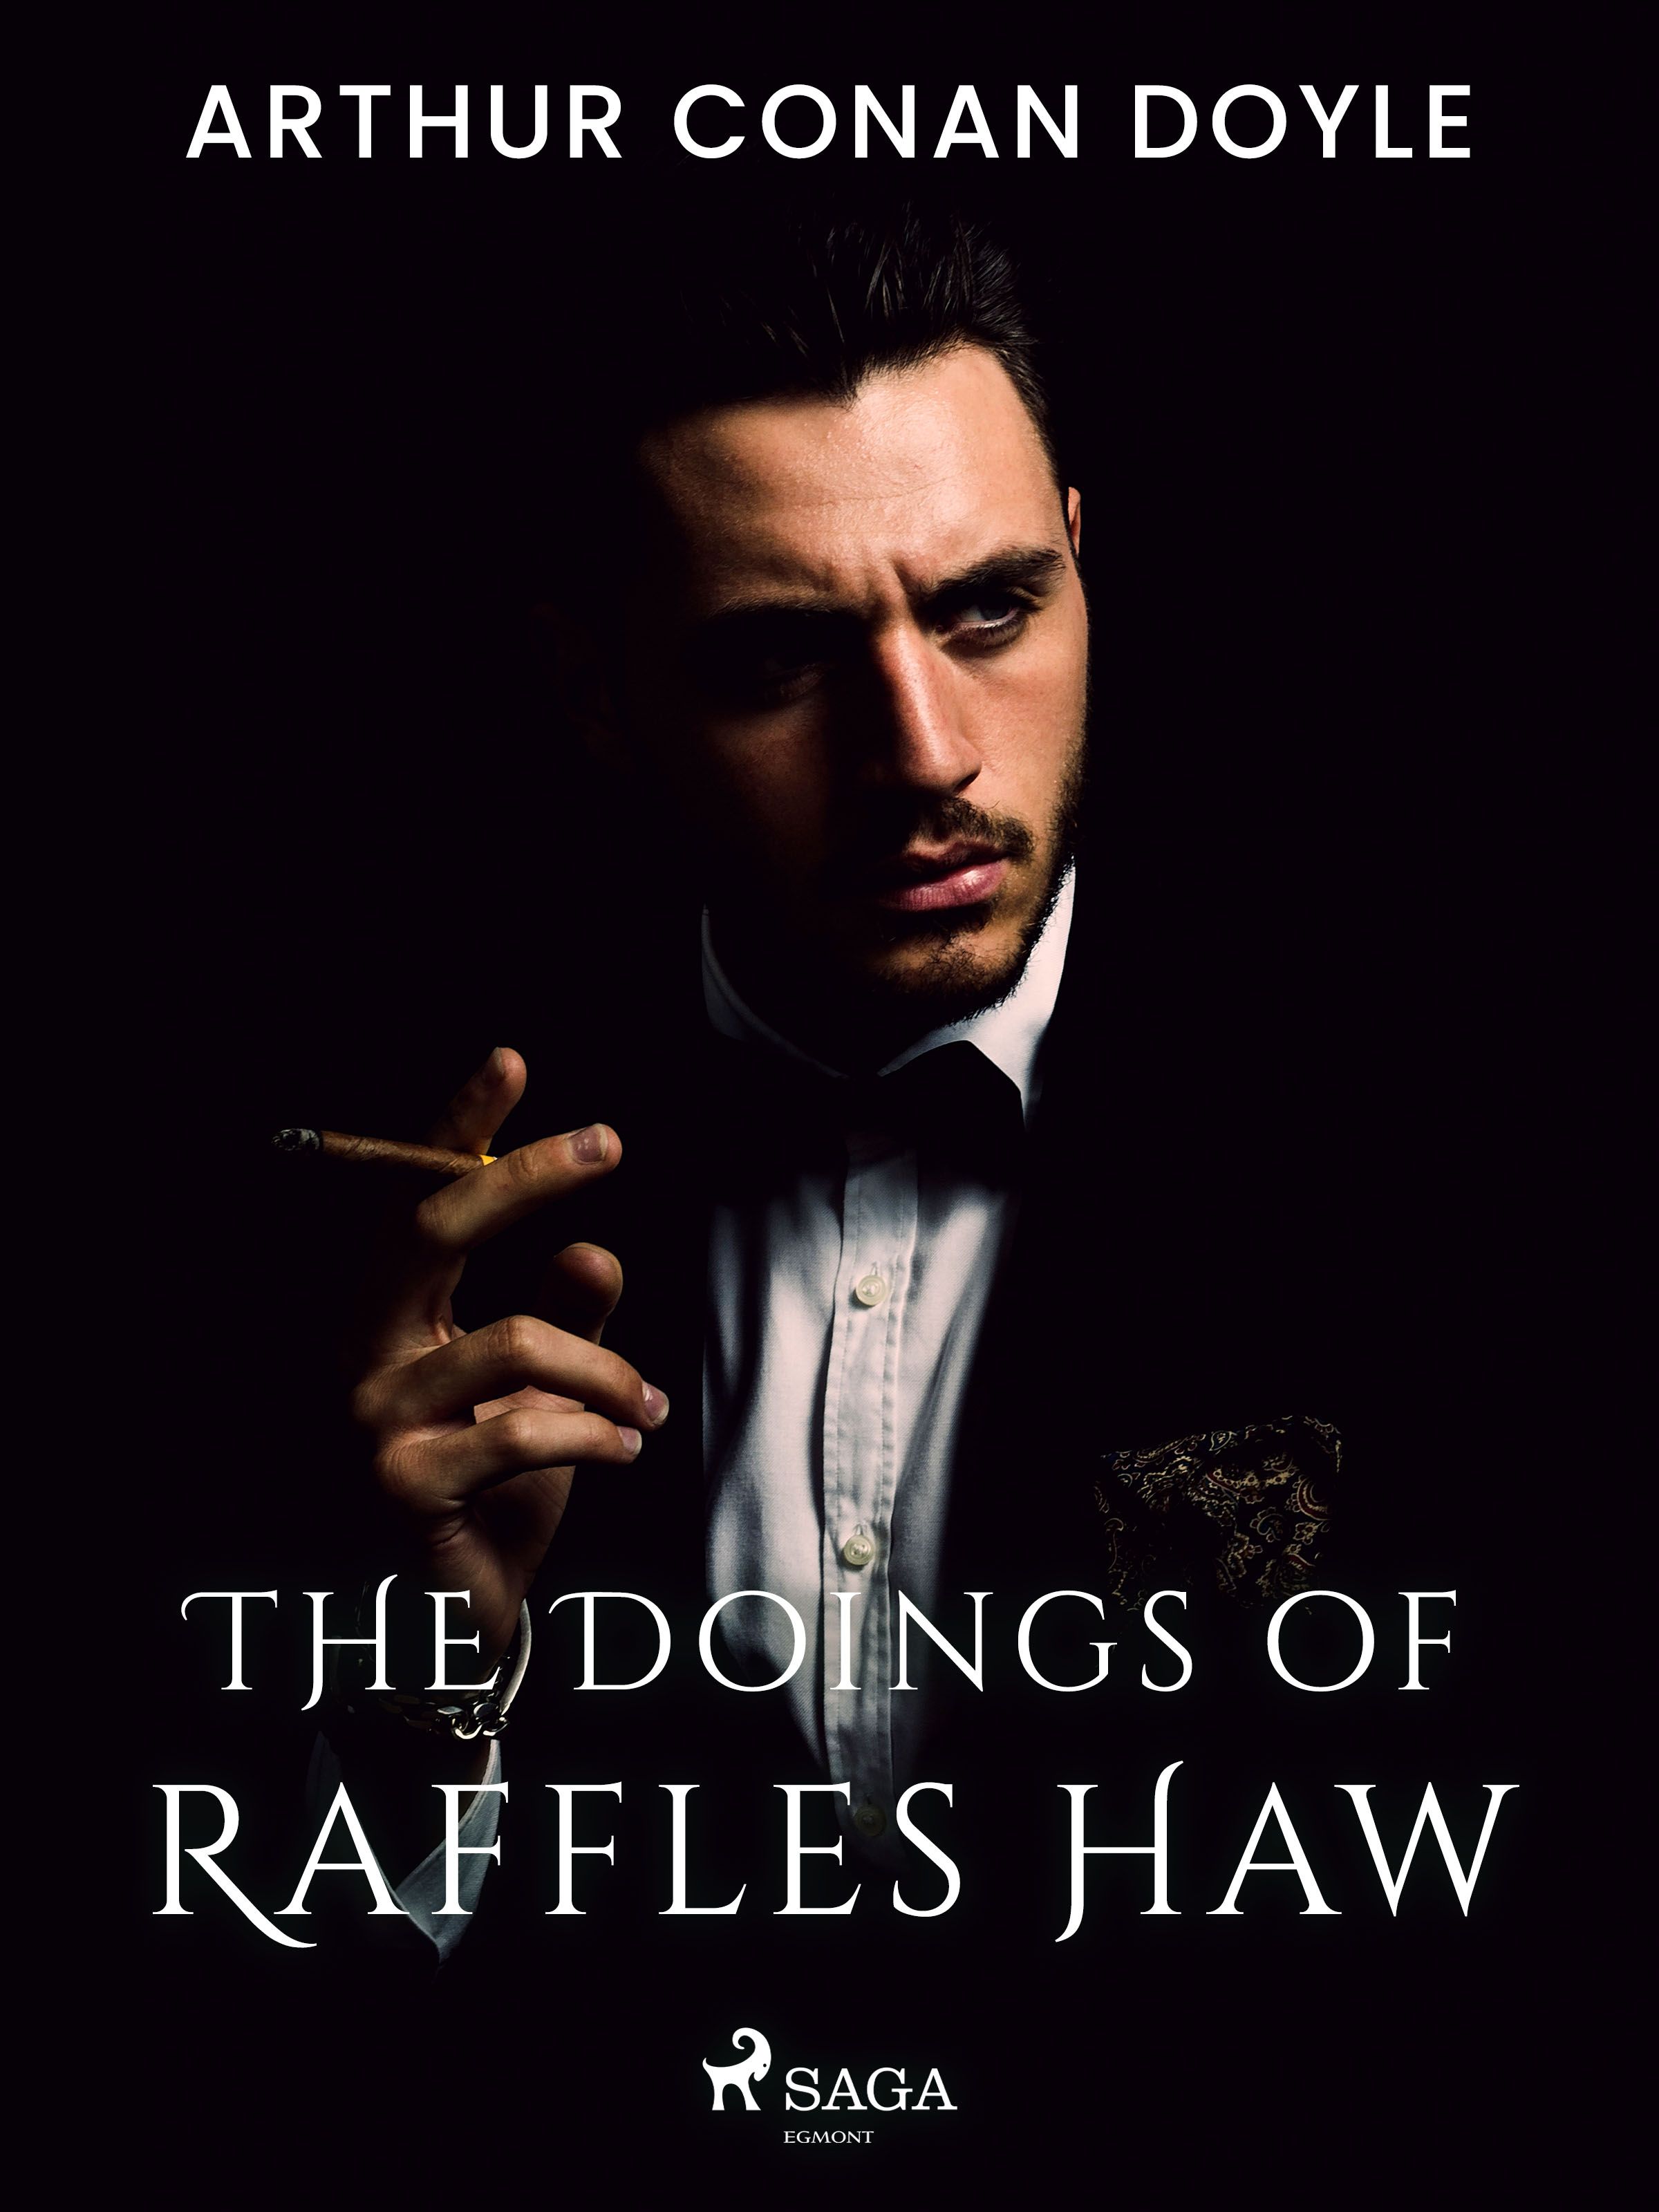 The Doings of Raffles Haw, e-bok av Arthur Conan Doyle